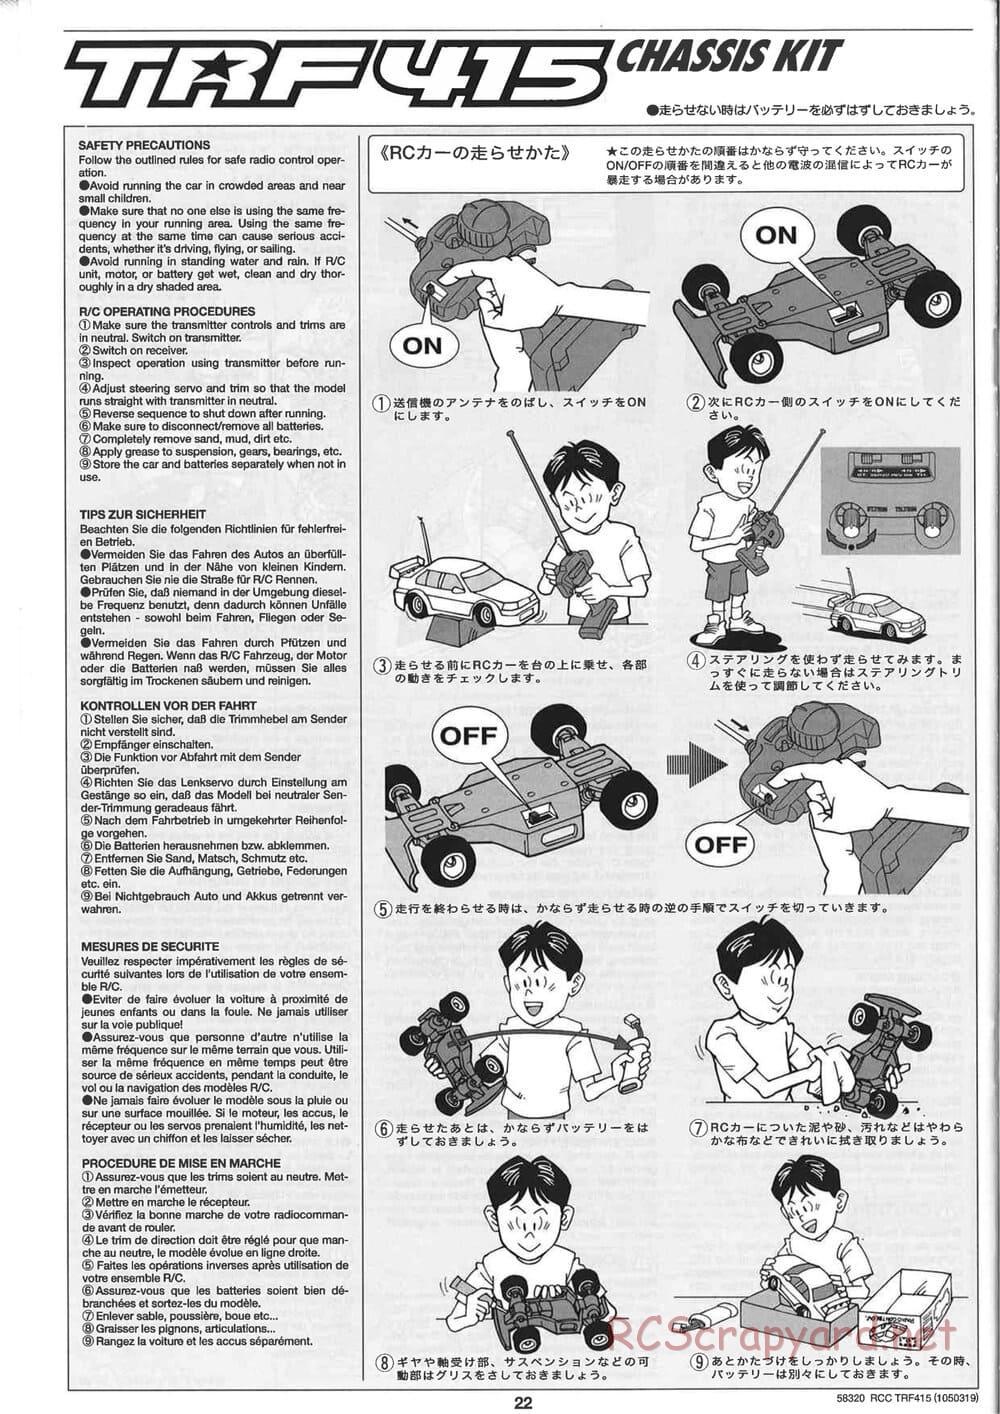 Tamiya - TRF415 Chassis - Manual - Page 22